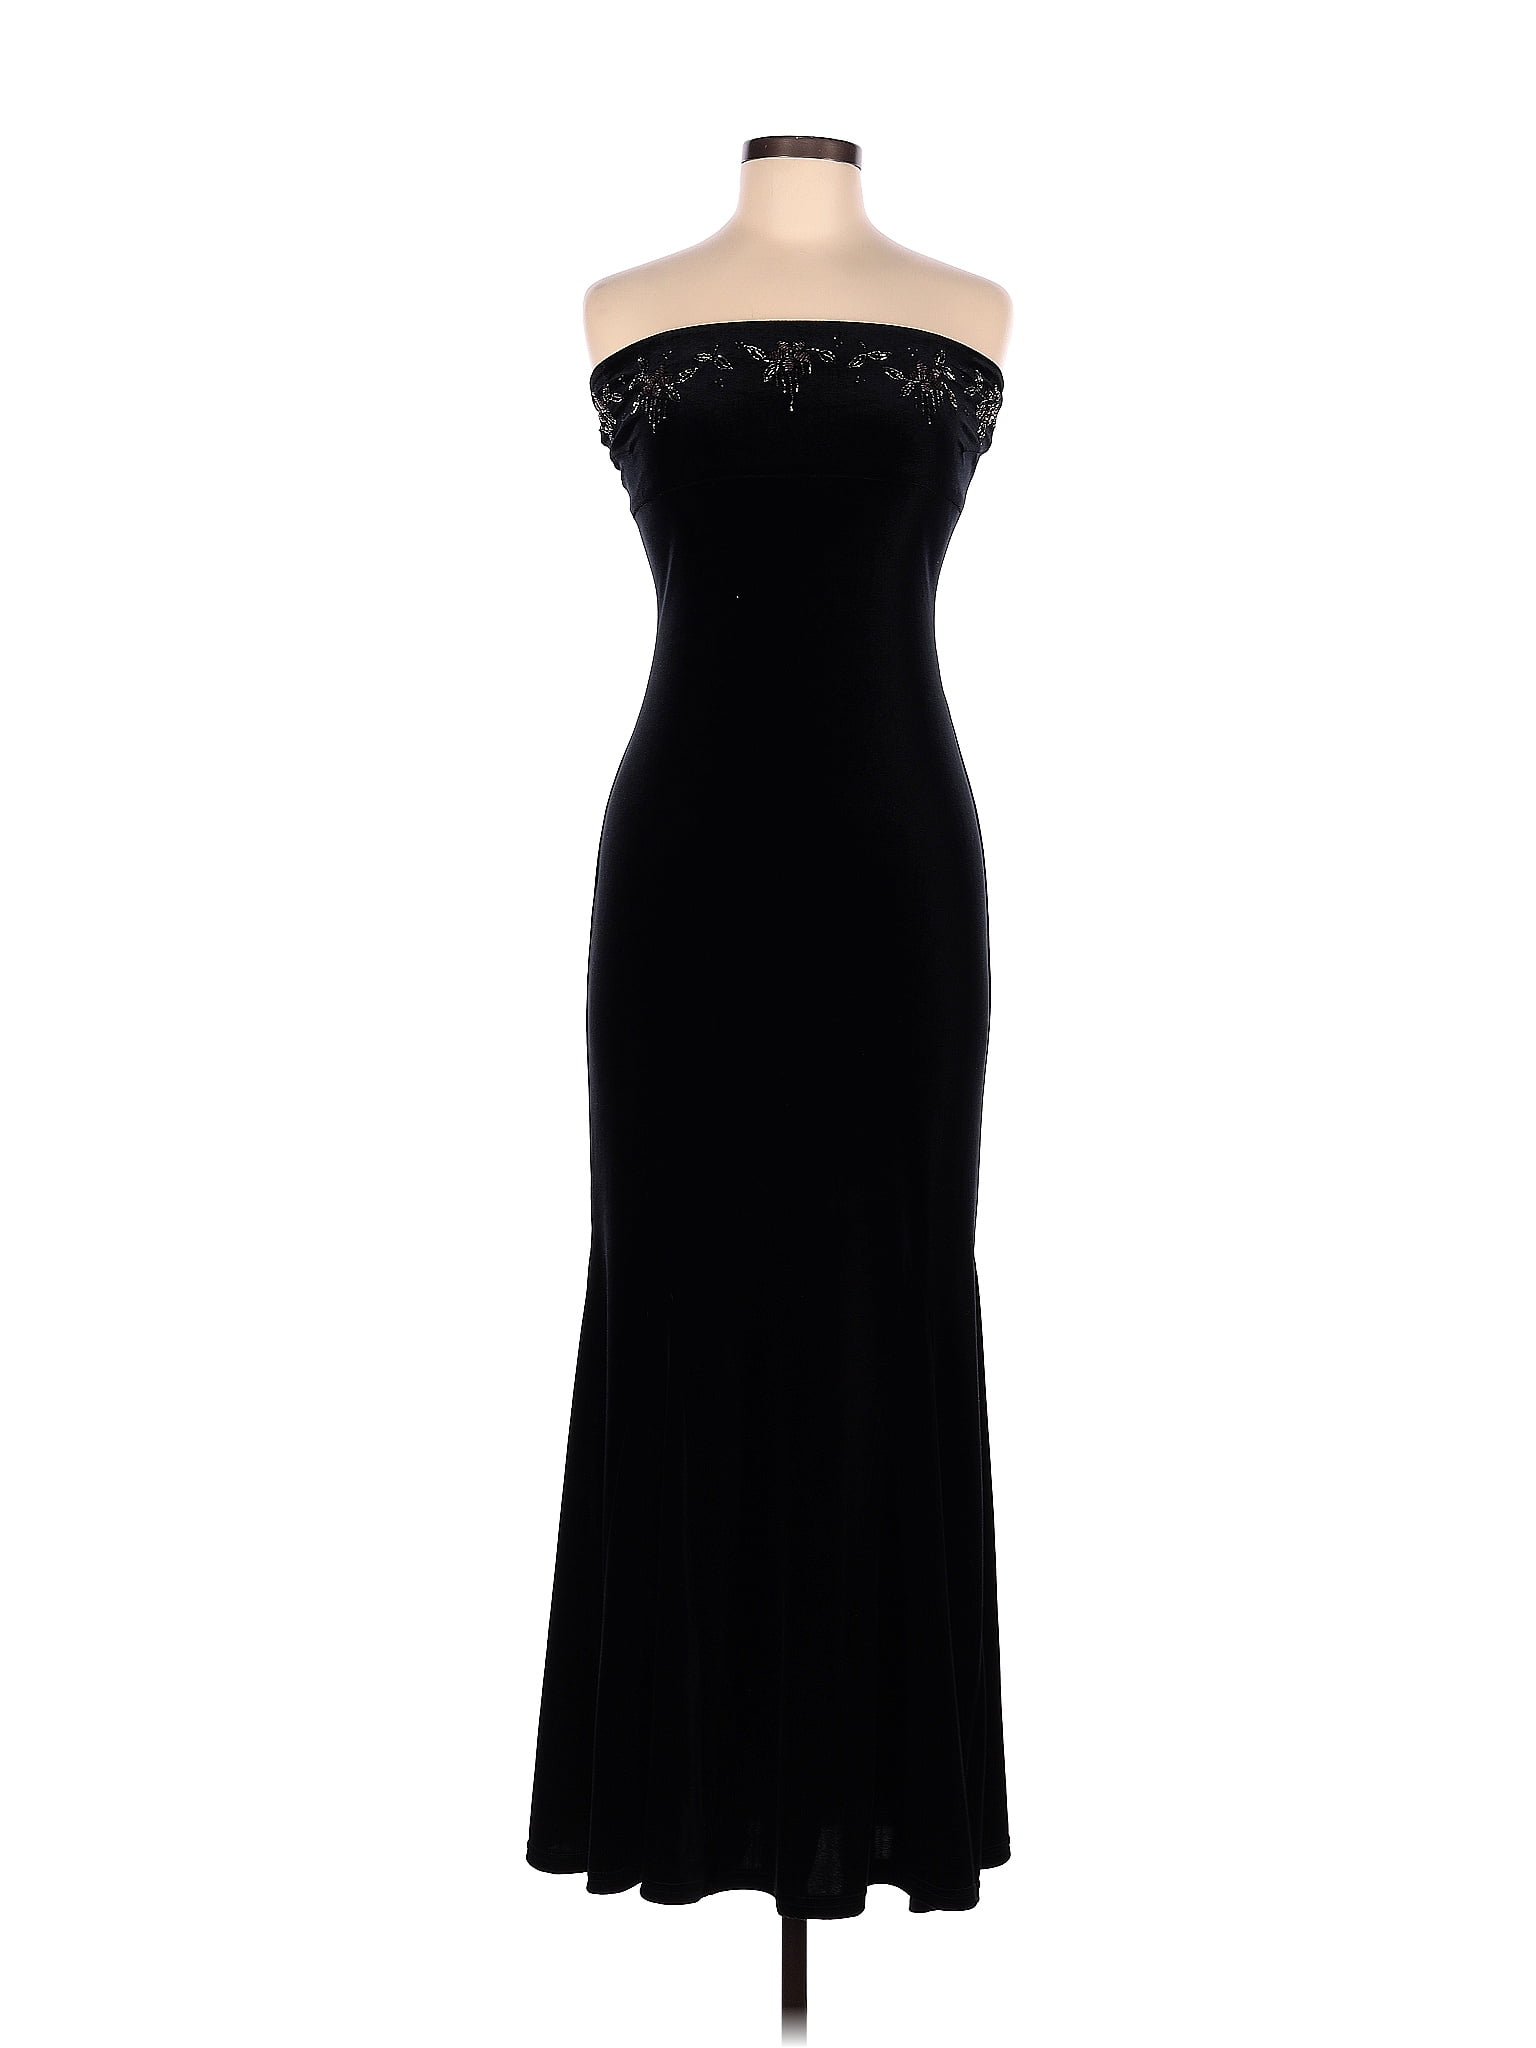 ASHLEY PARK x RTR Solid Black Cocktail Dress Size M - 78% off | thredUP